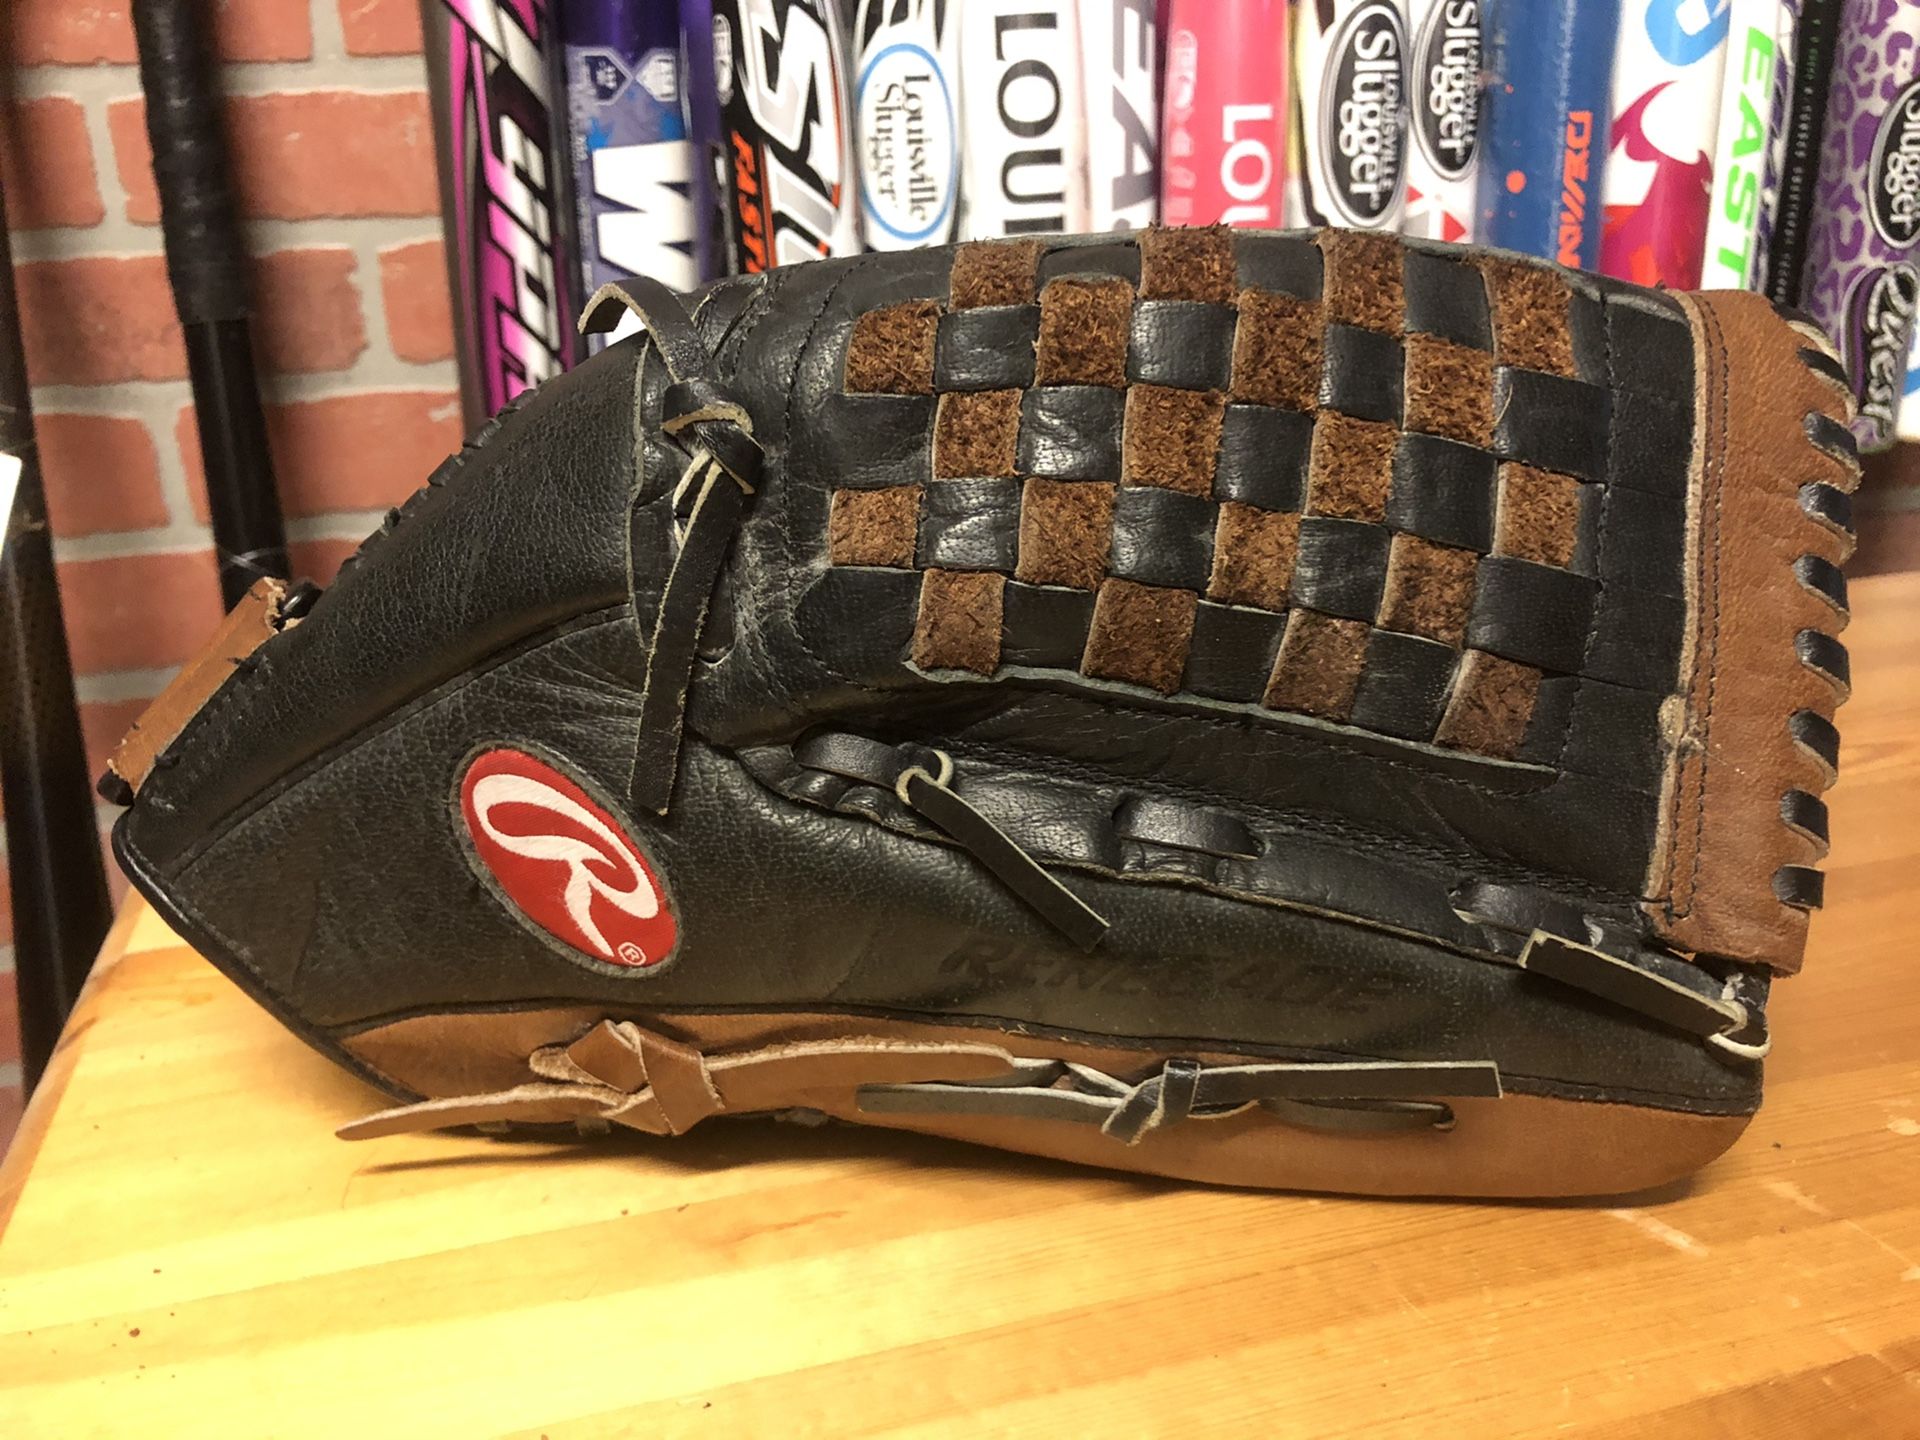 Rawlings Renegade 13” softball glove